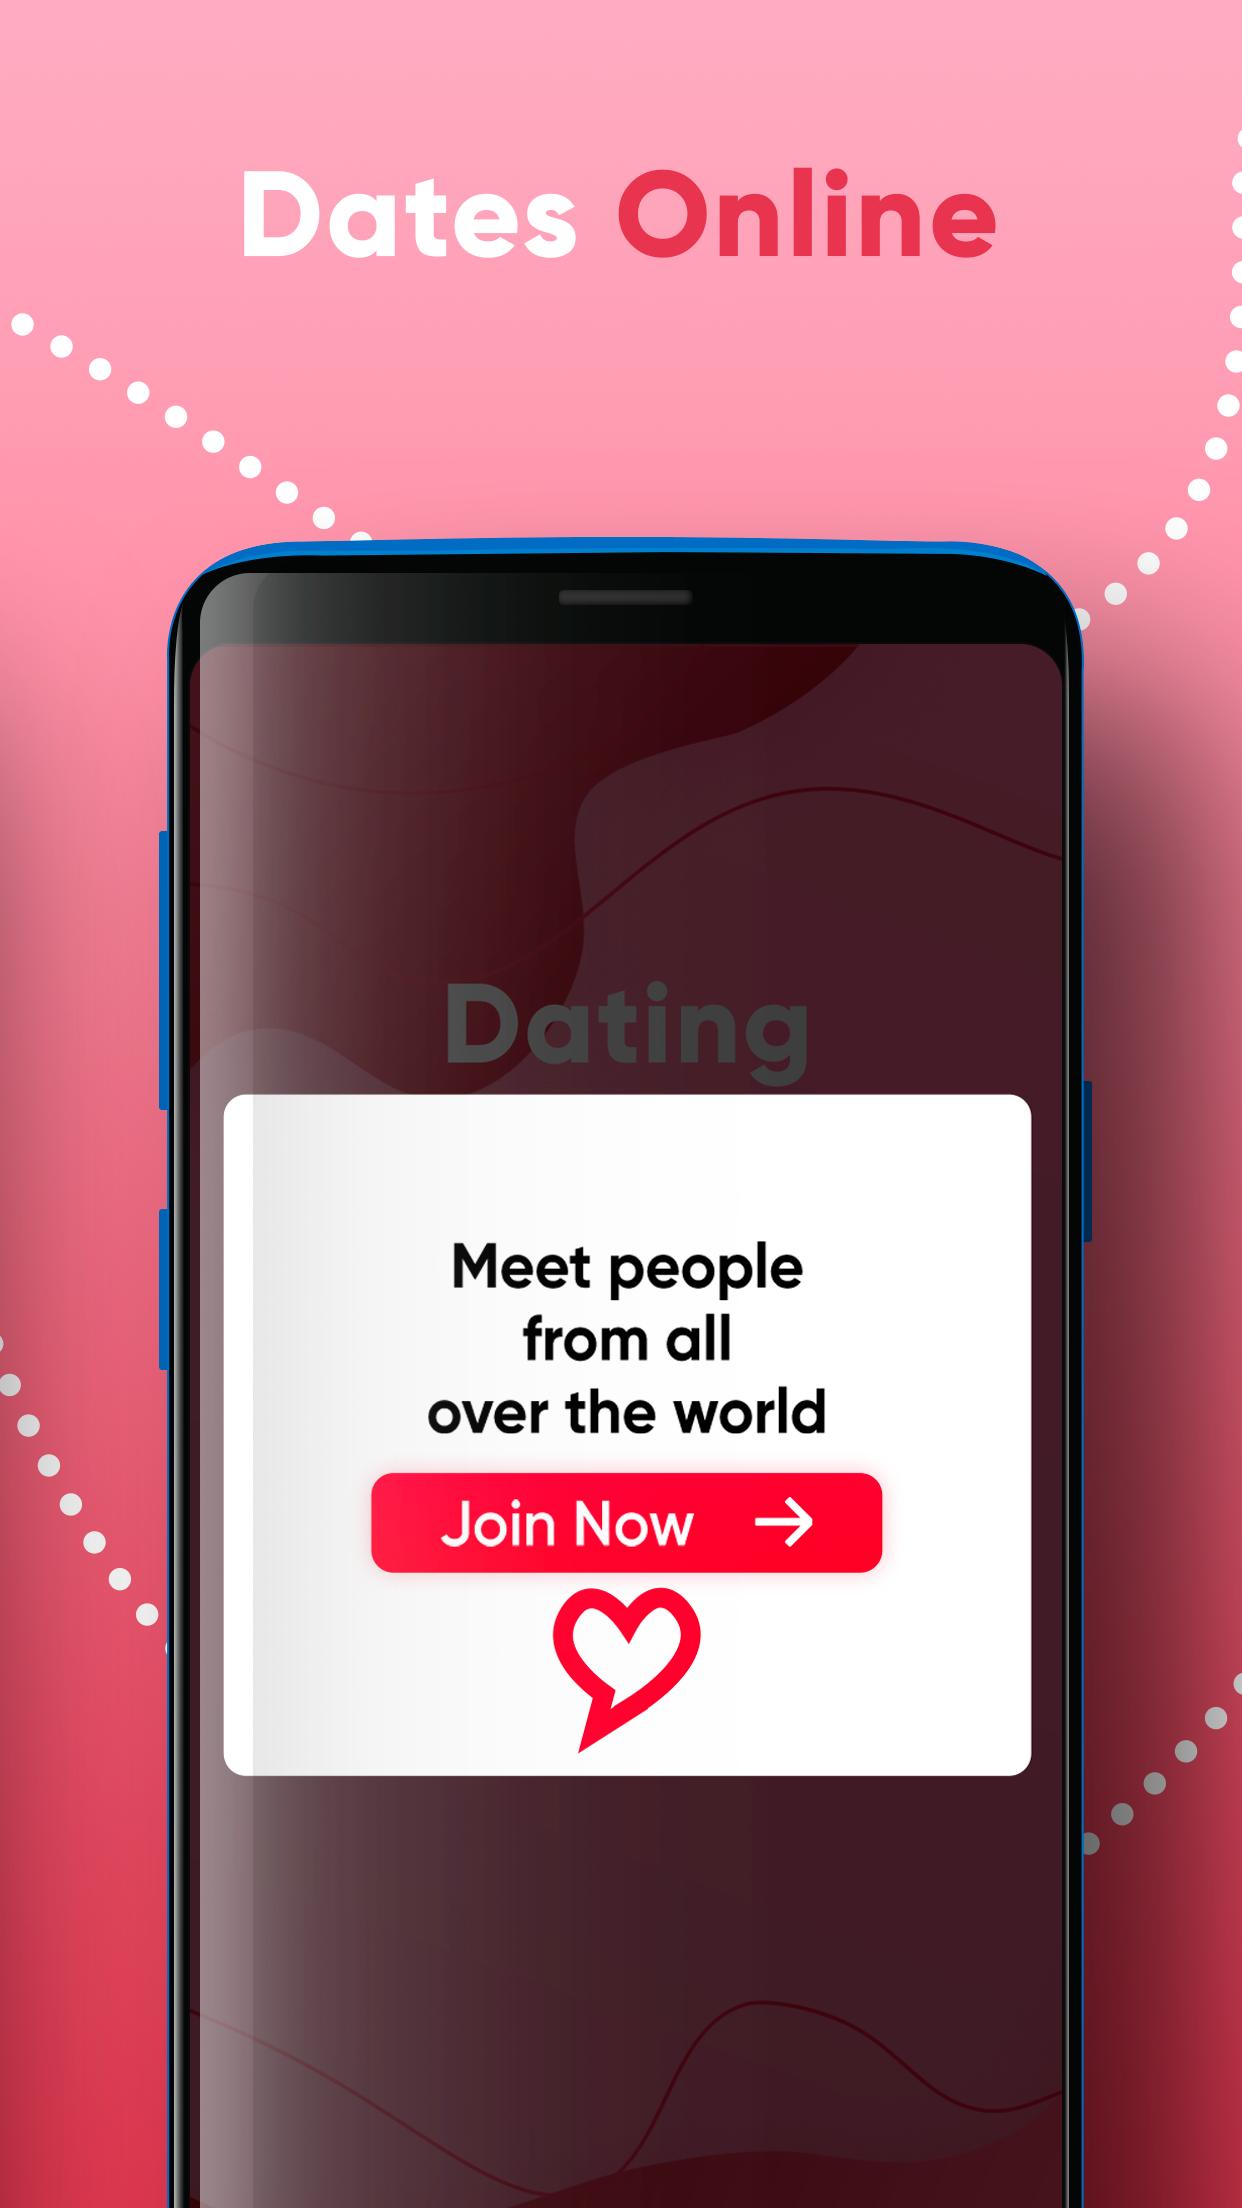 Dating Online App - Find Dates 2.0 Screenshot 8